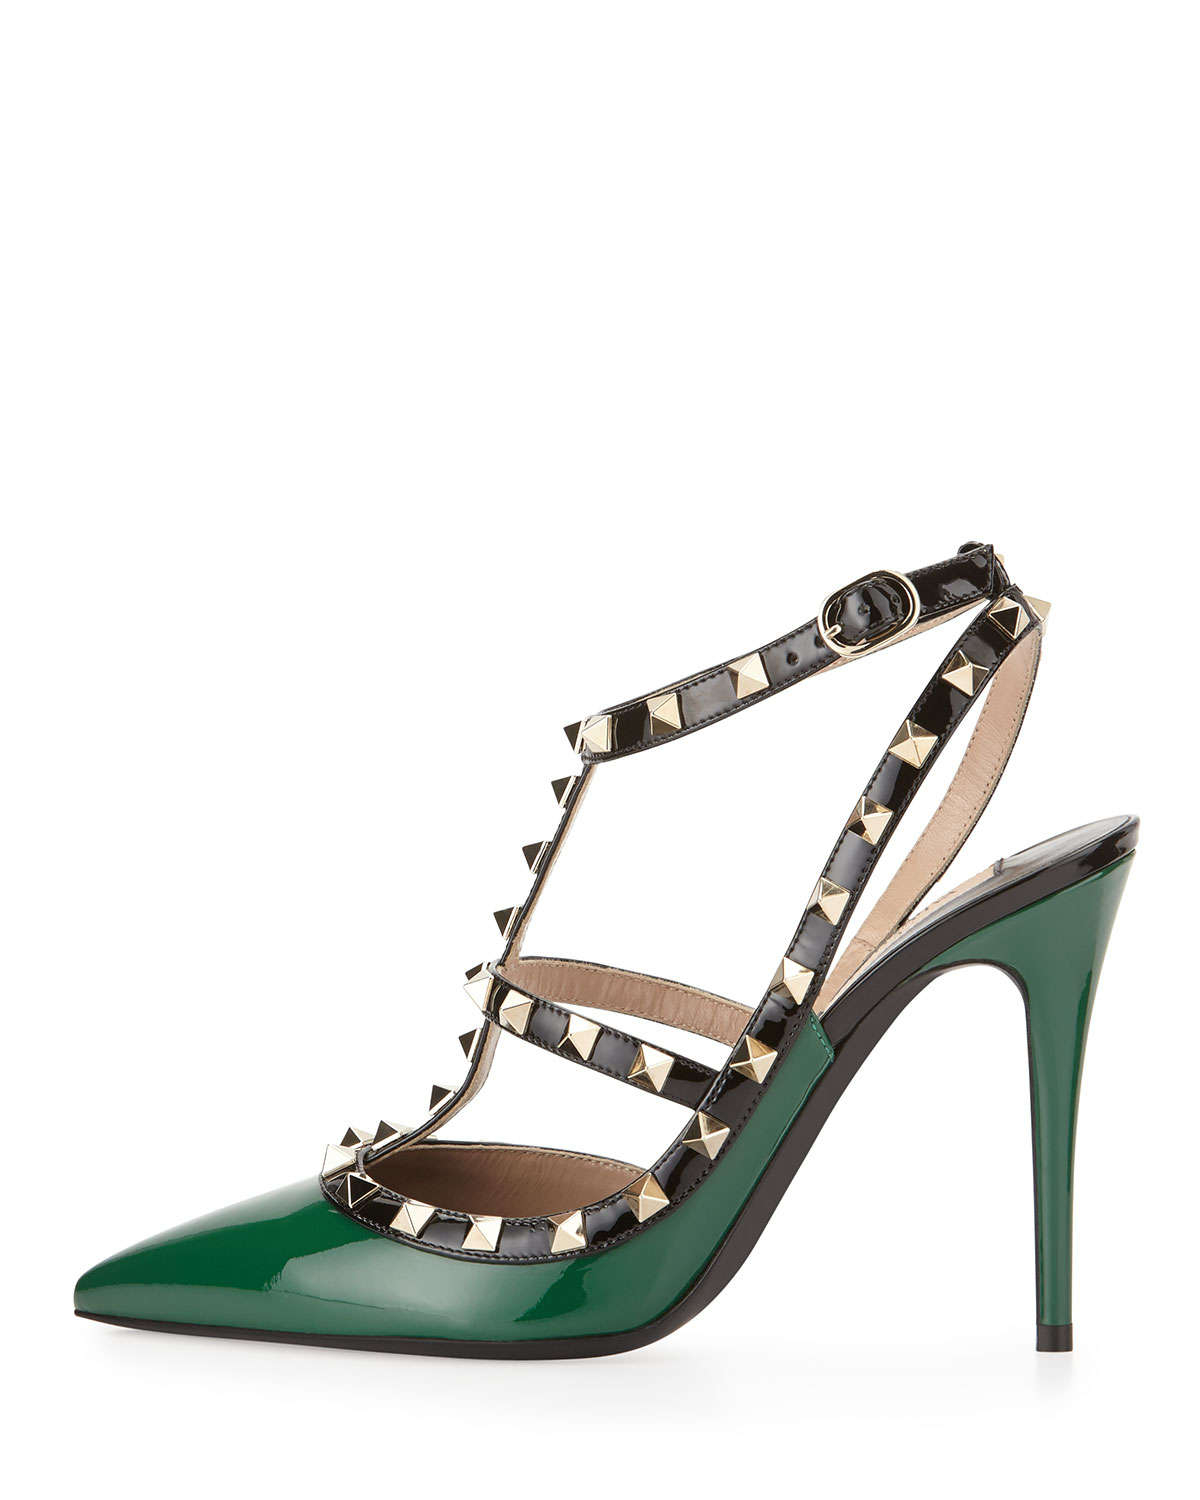 Valentino Garavani Rockstud Metallic Leather Pumps in Emerald (Green ...